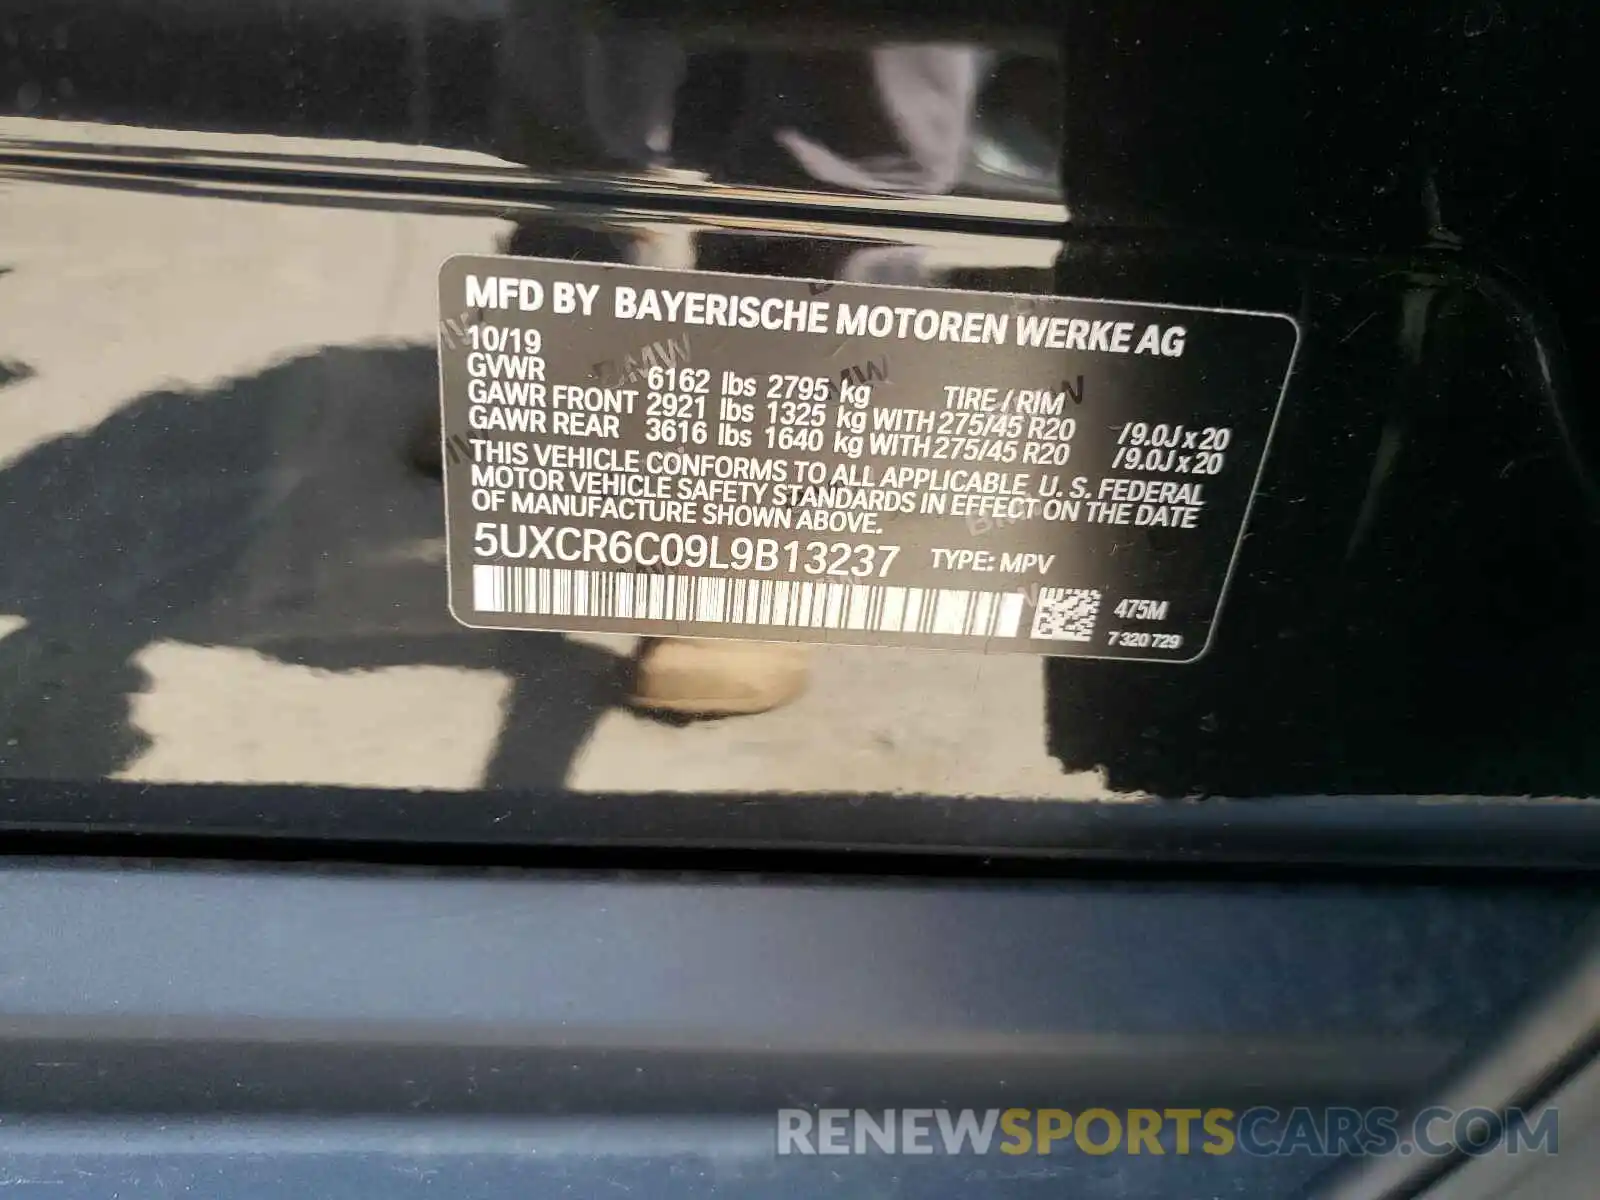 10 Photograph of a damaged car 5UXCR6C09L9B13237 BMW X5 2020